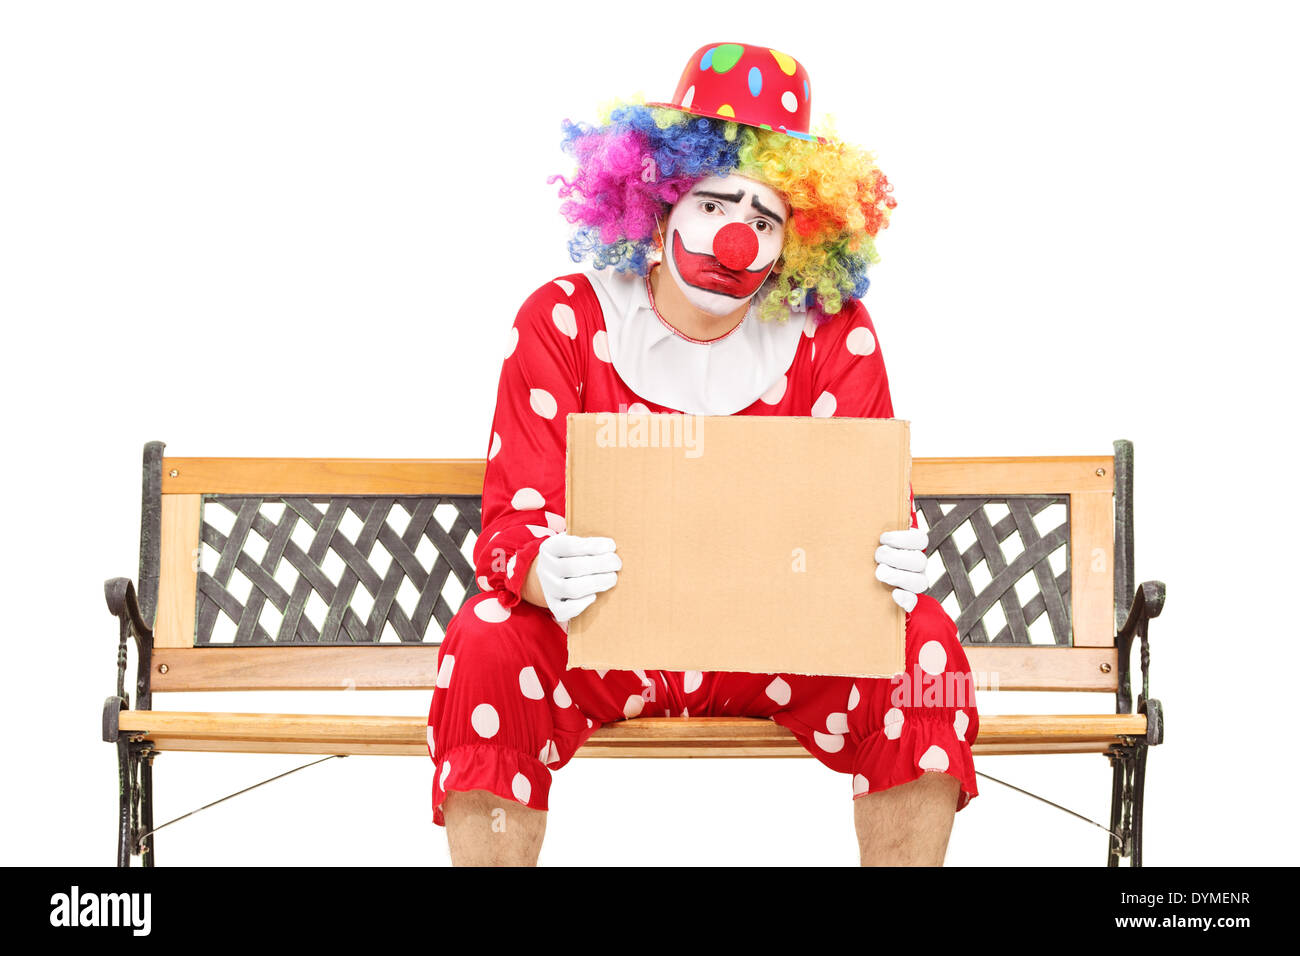 Sad clown holding a blank carton sign Stock Photo